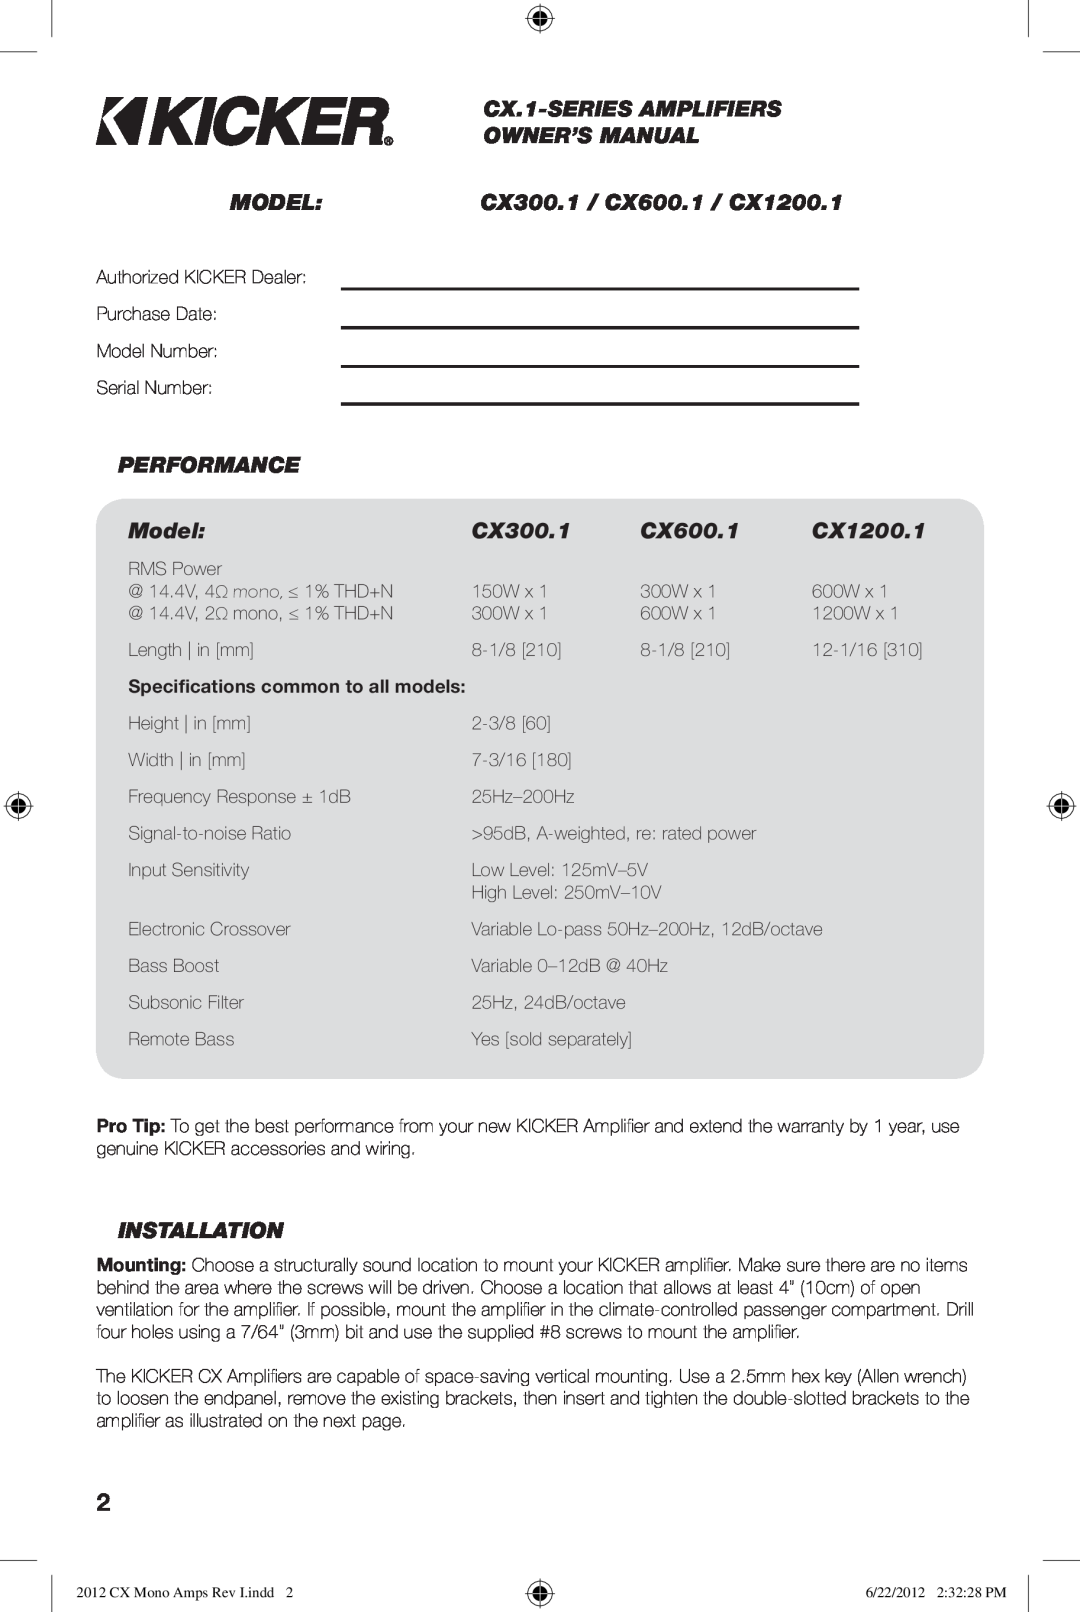 Kicker owner manual CX.1-SERIESAMPLIFIERS OWNER’S MANUAL, Model, CX300.1 / CX600.1 / CX1200.1, Performance, Installation 